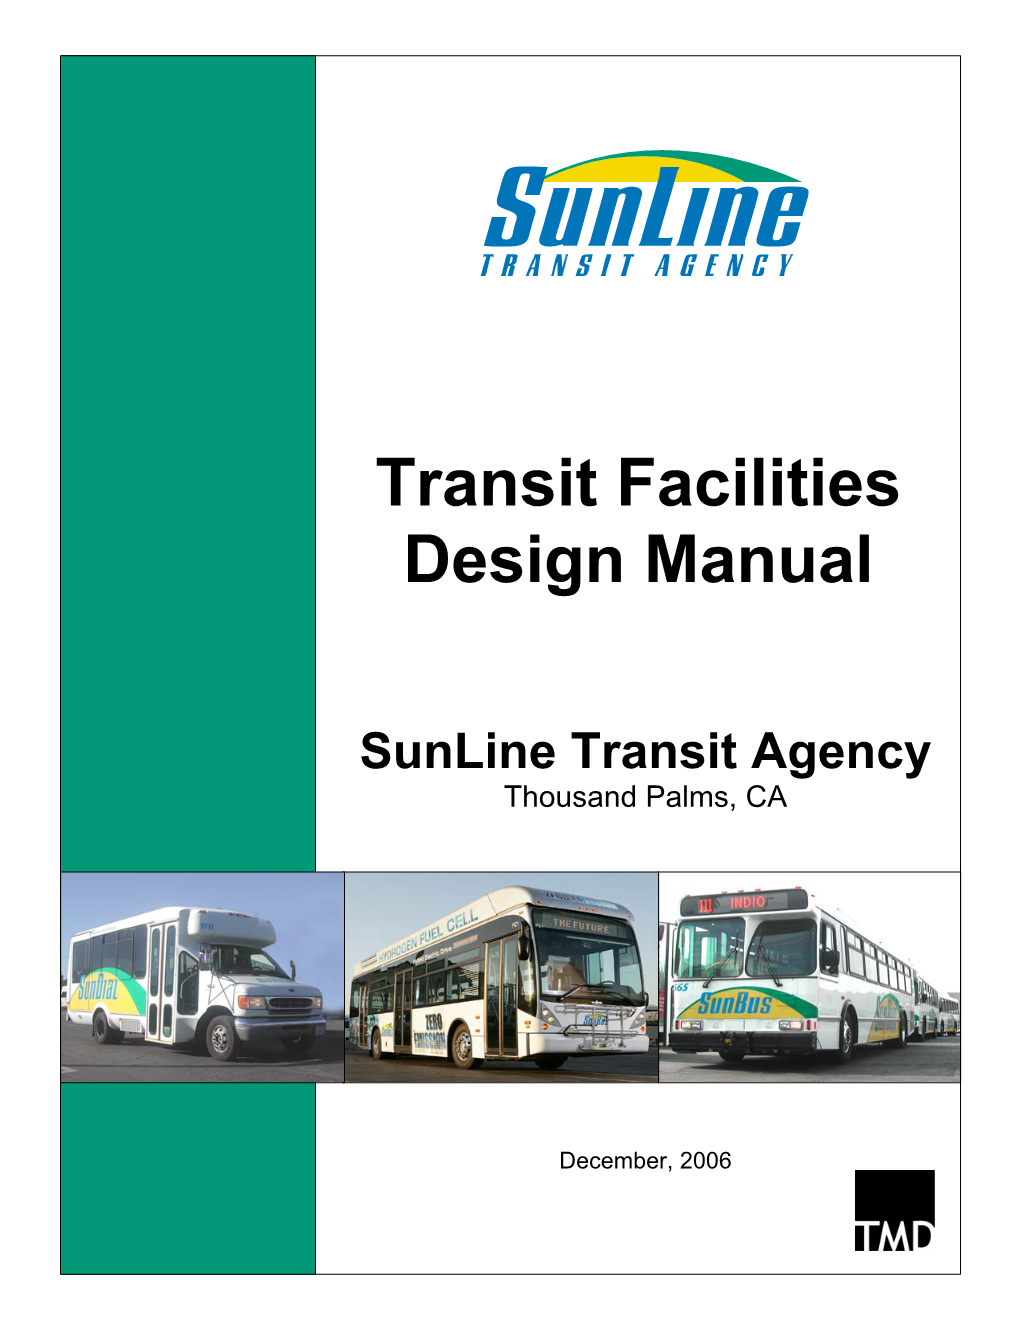 Transit Facilities Design Manual, Dtd Dec 2006